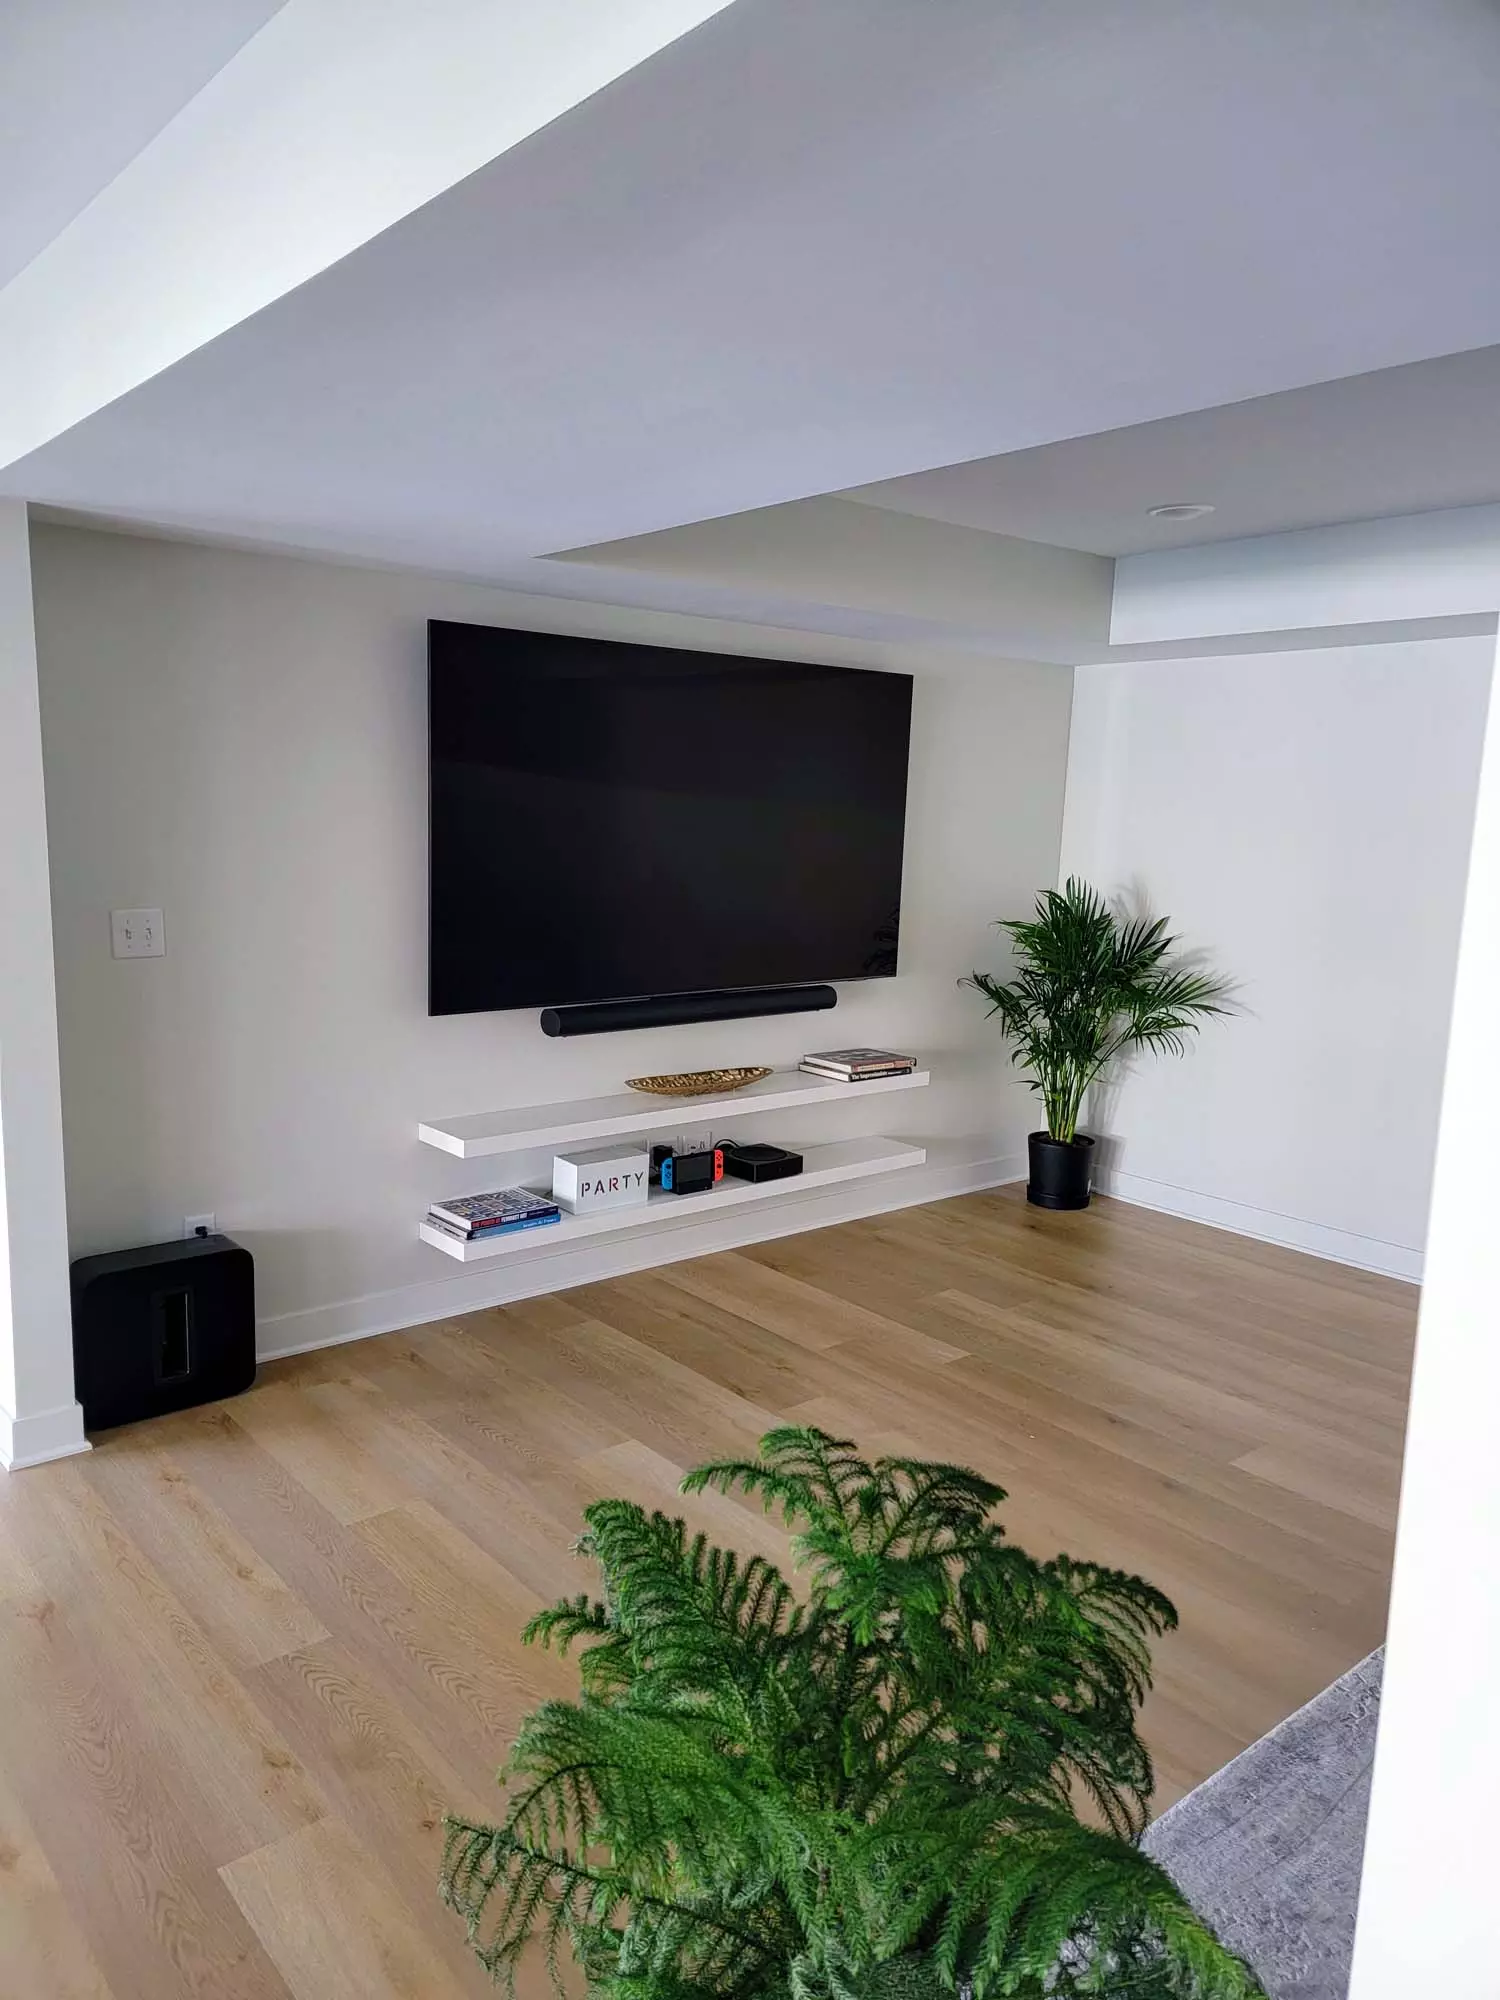 TV- Media Room- family space